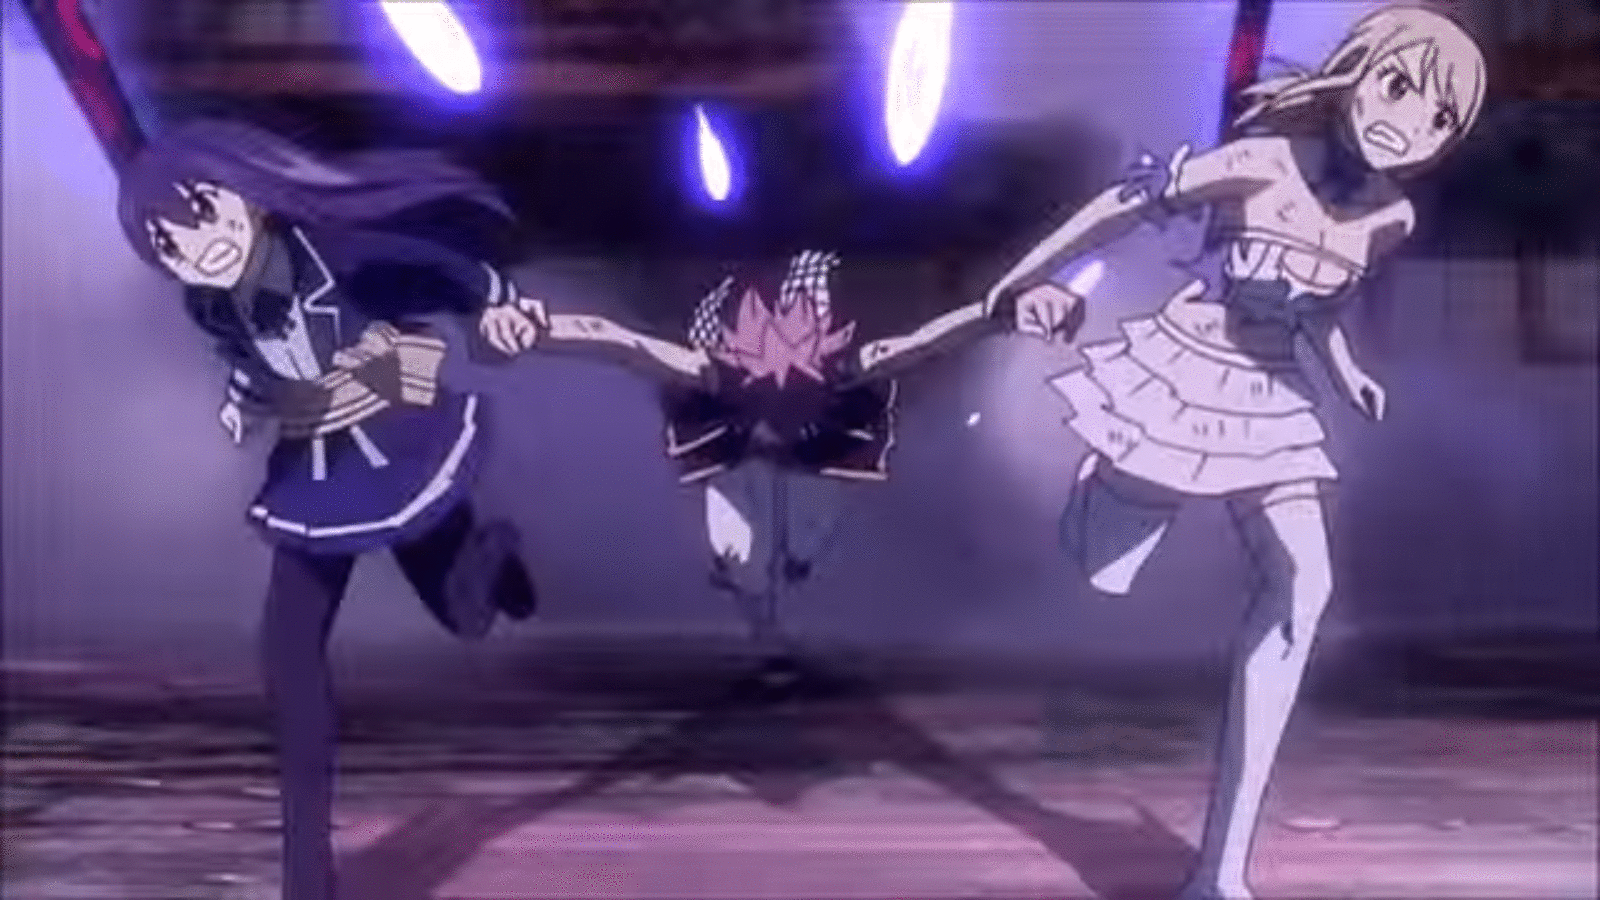 900 fairy tail ideas in 2021 anime epic sword battle gif medium